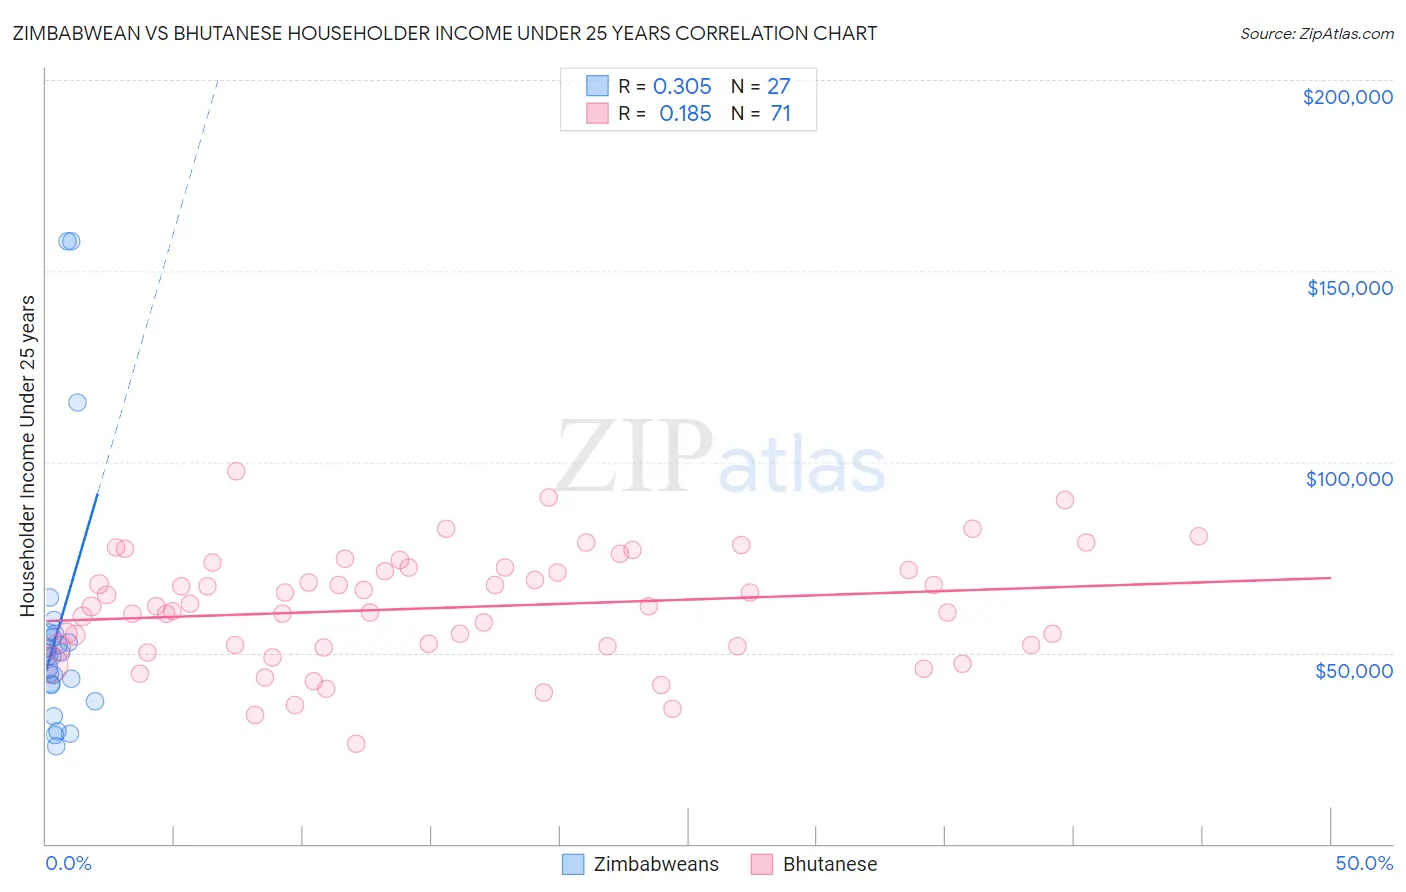 Zimbabwean vs Bhutanese Householder Income Under 25 years